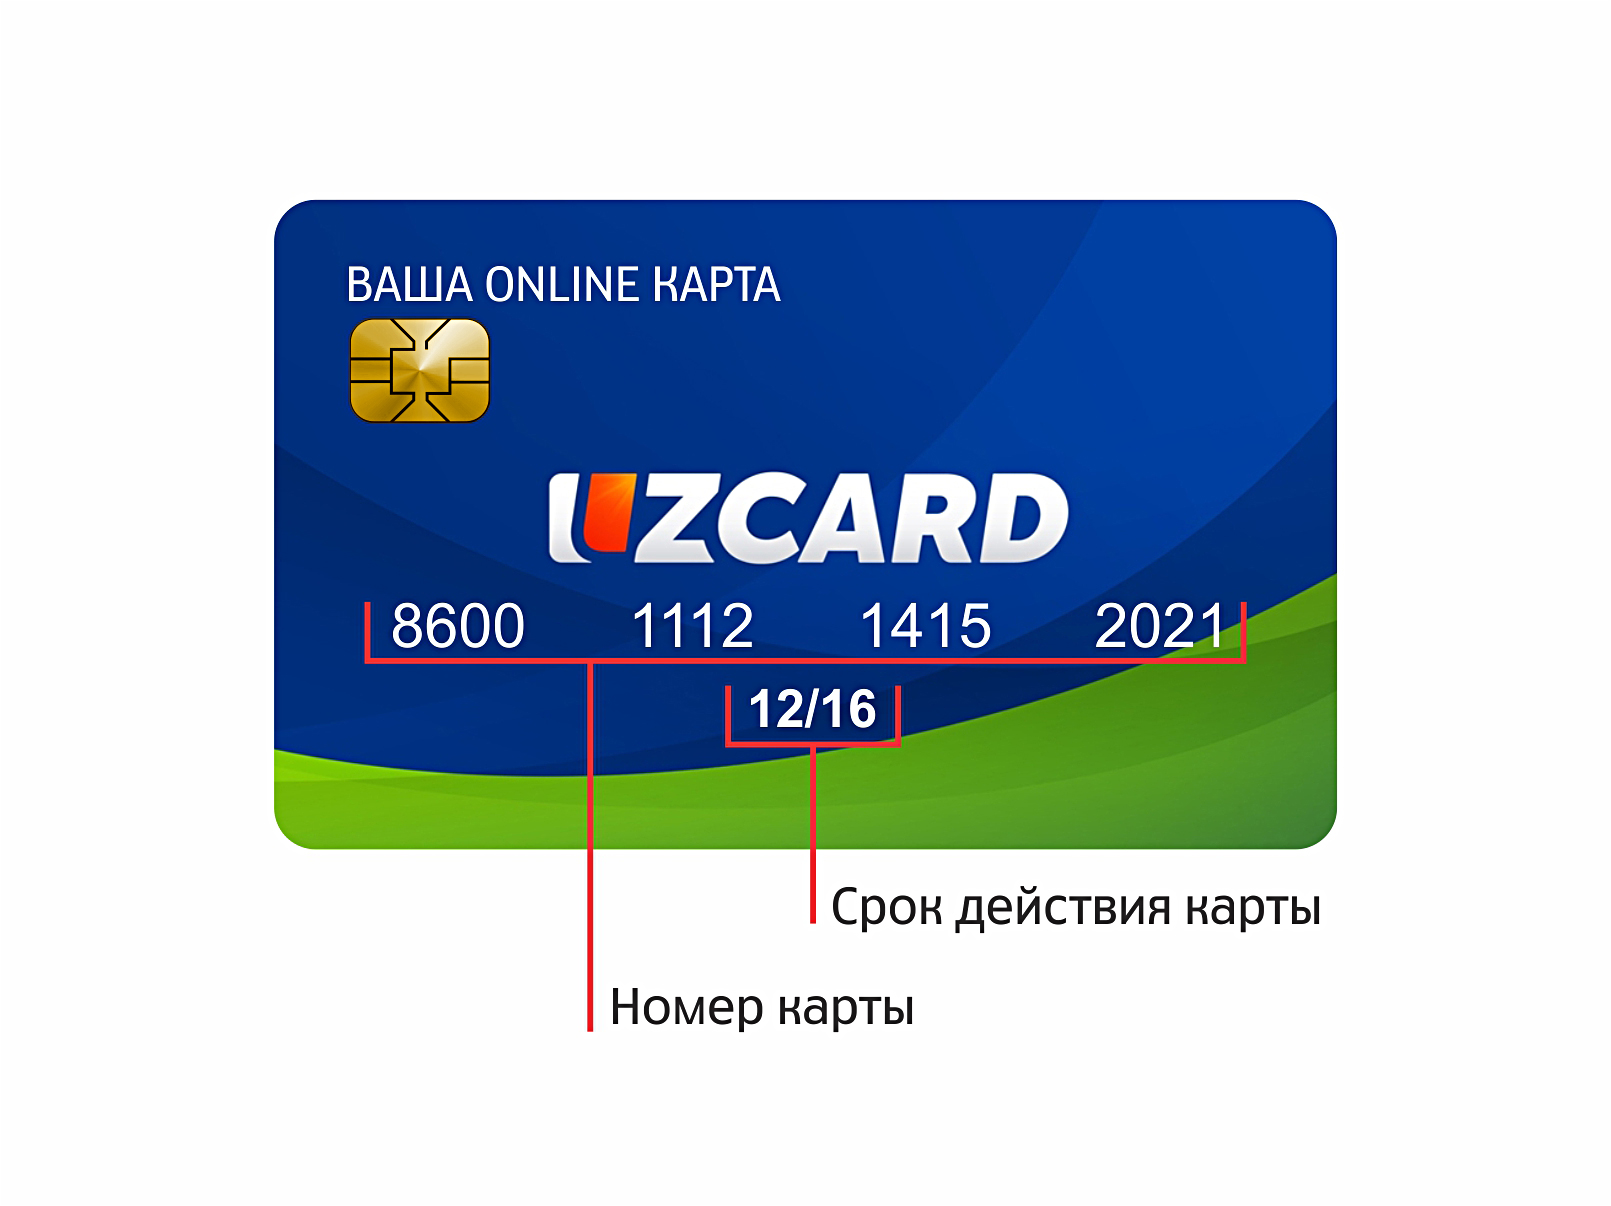 Действует до на карте. Карта UZCARD. UZCARD карта в Узбекистане. Пластик карта UZCARD. Пластиковые карточки UZCARD.